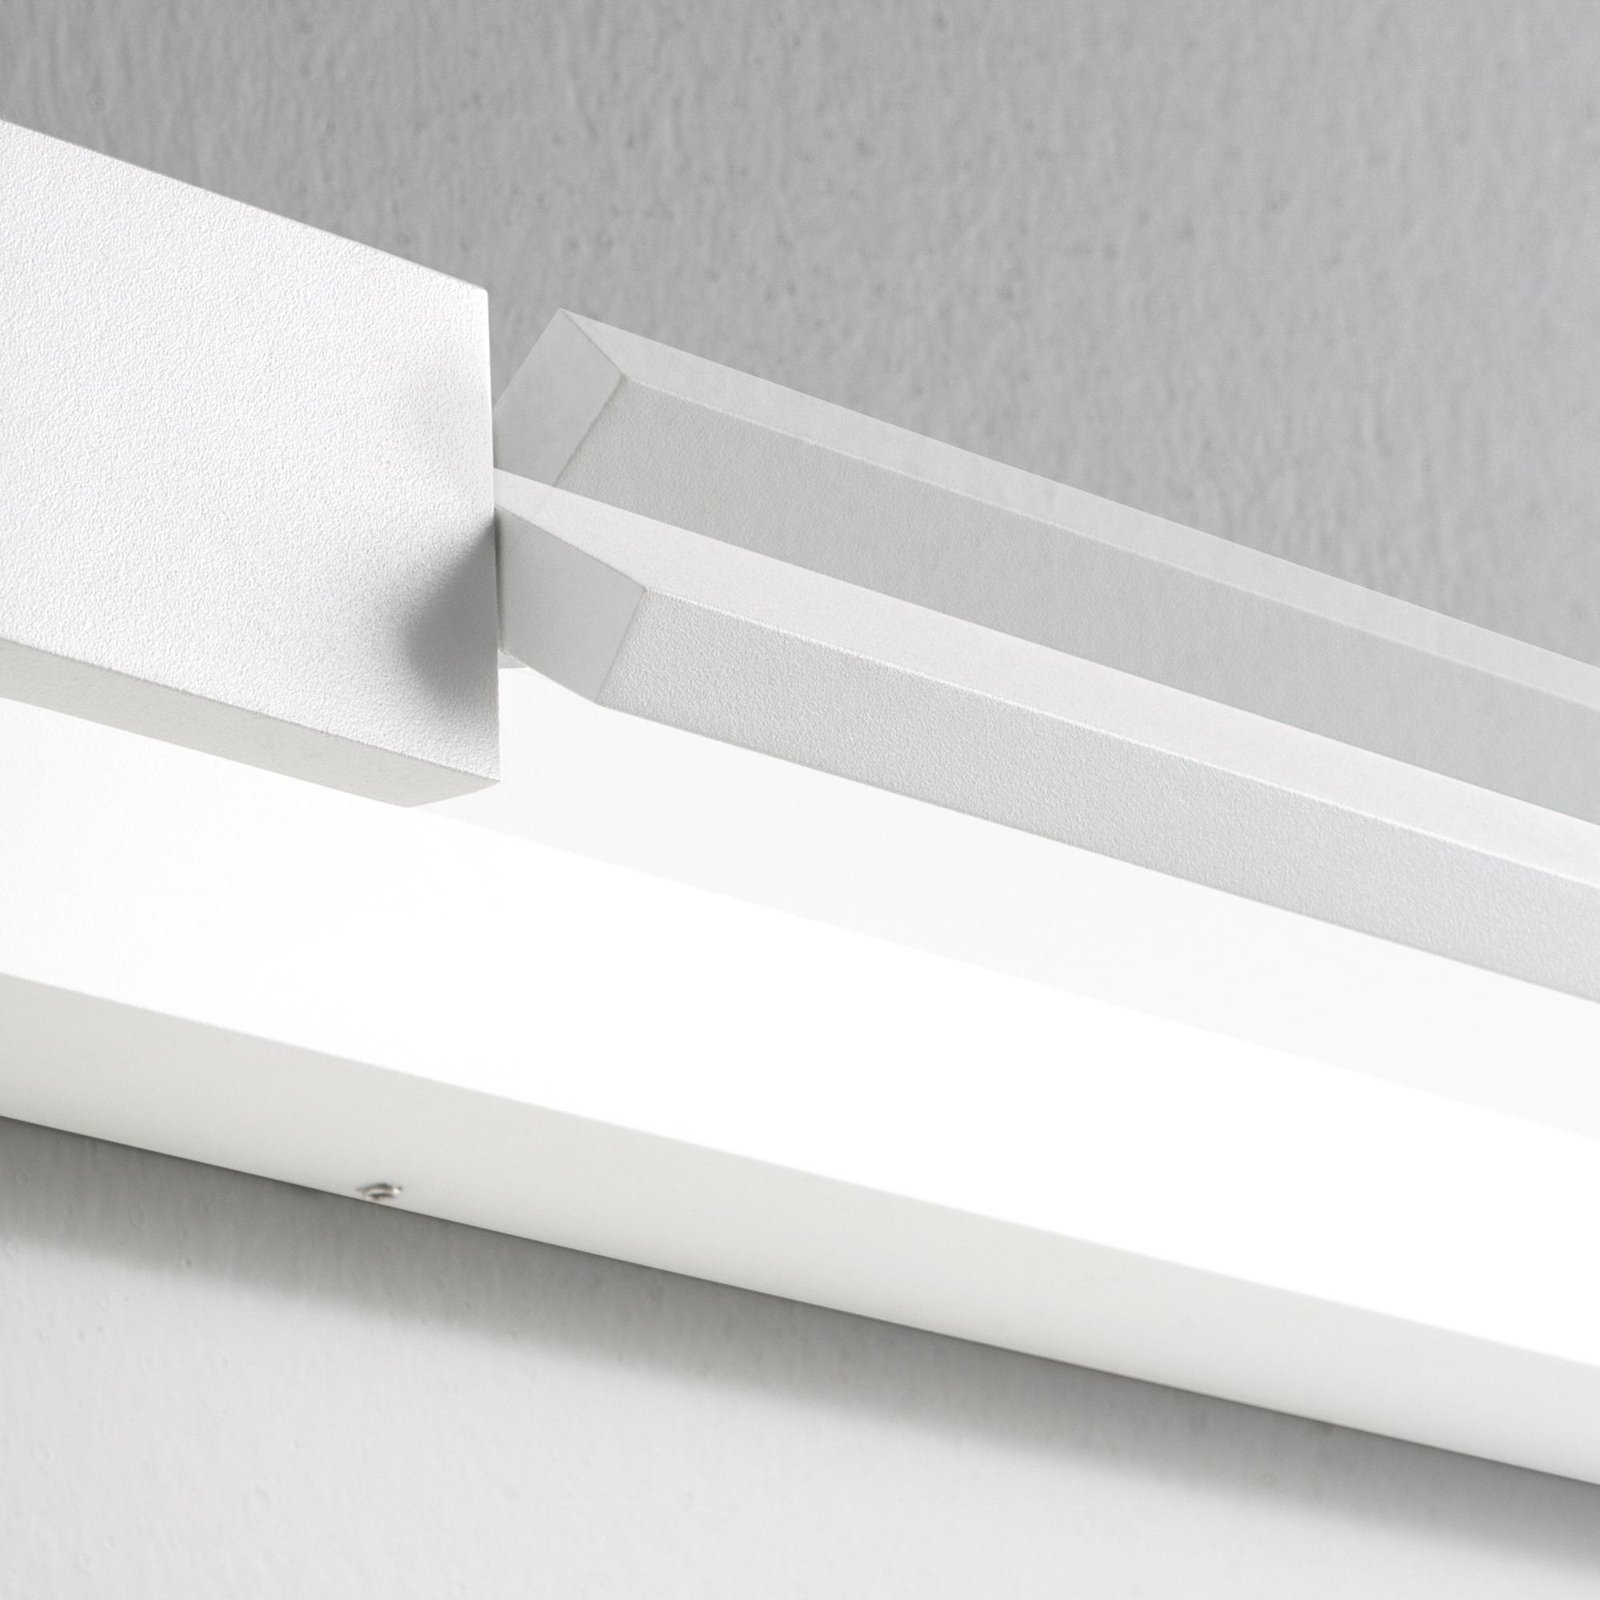 Ideal Lux LED wall light Equilíbrio branco, metal, largura 45 cm